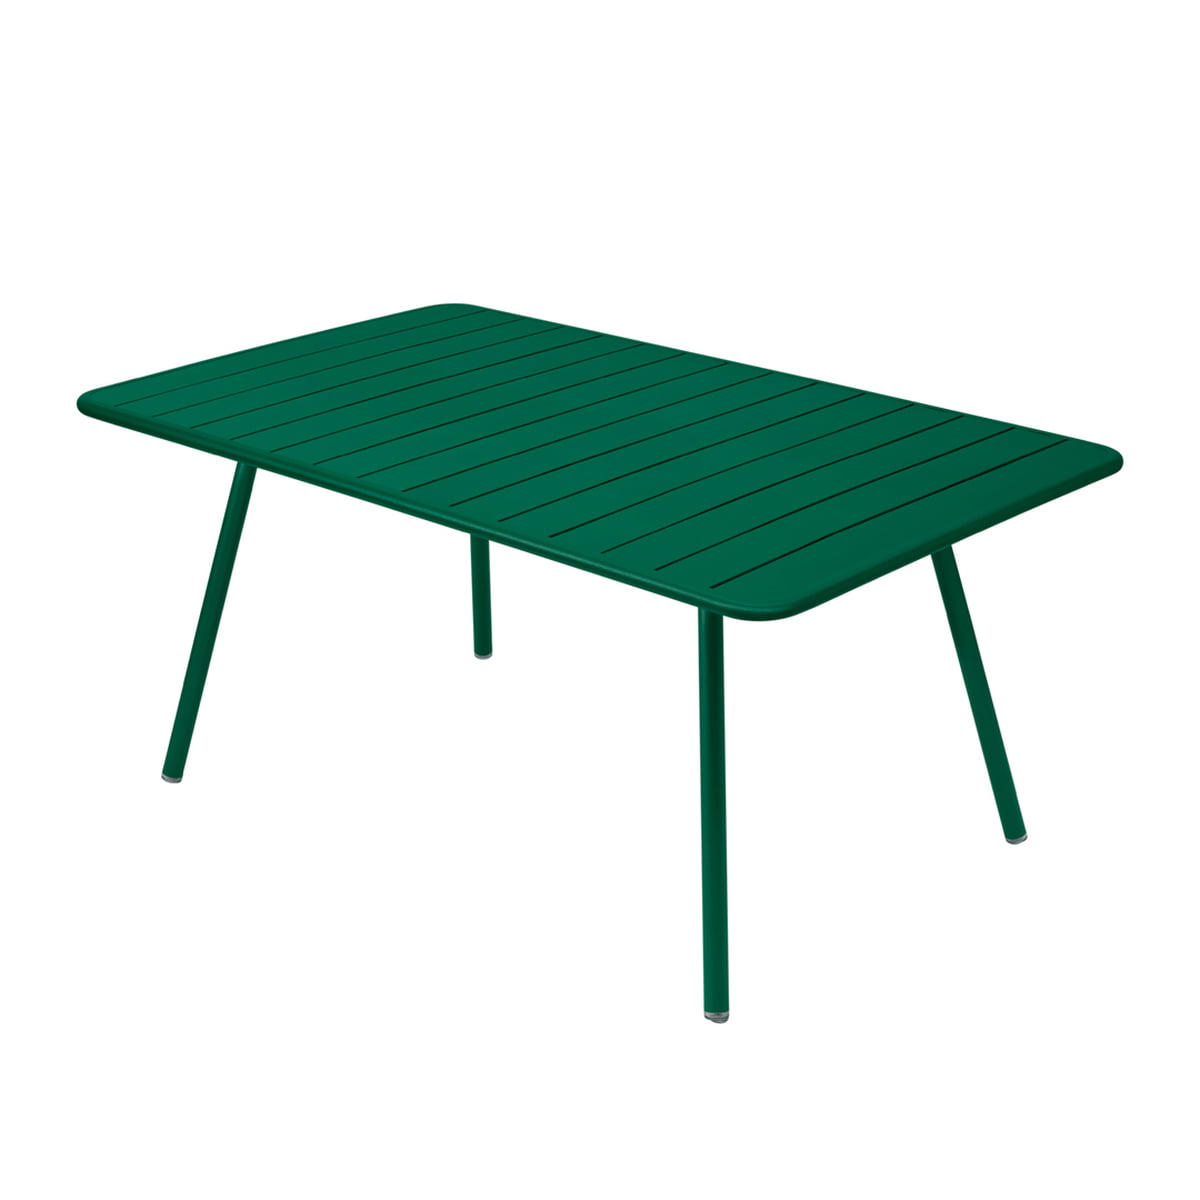 Mislukking ozon voorkant Fermob - Luxembourg Table, rectangular, 165 x 100 cm | Connox